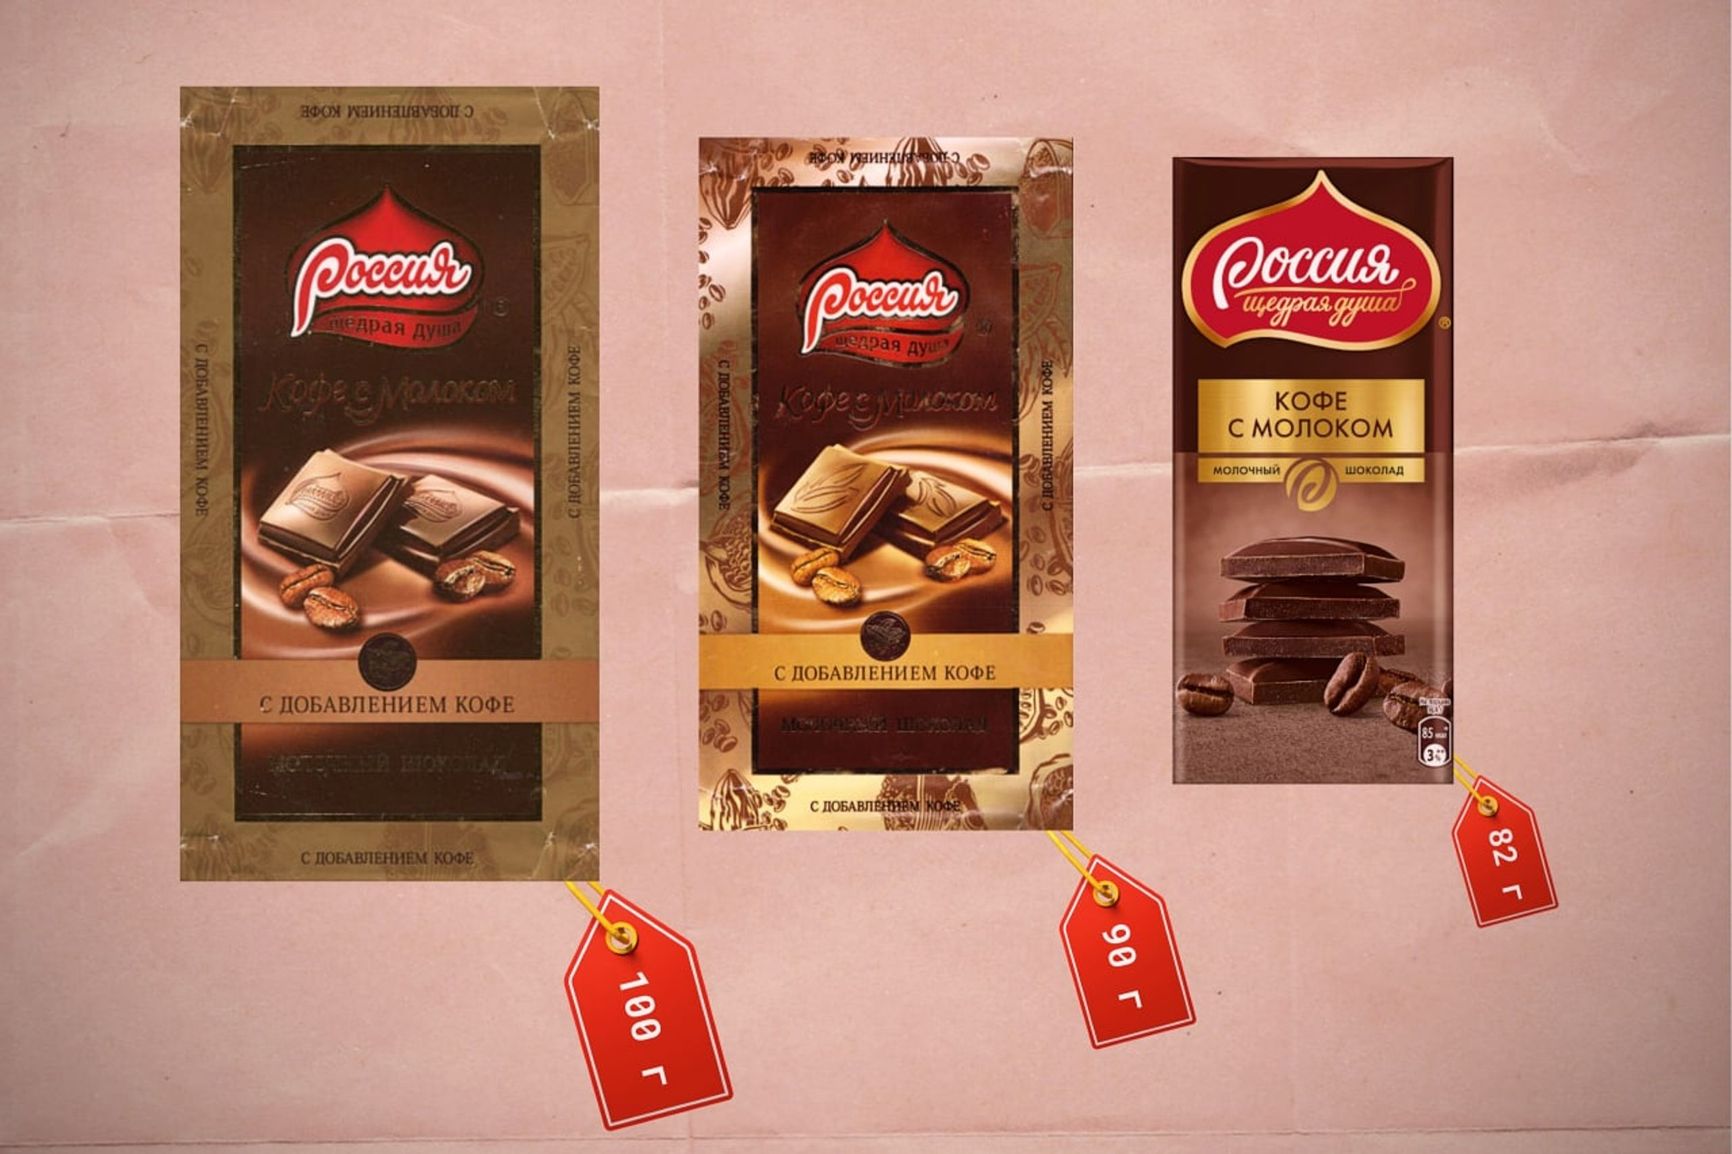 Rossiya chocolate bar, “Coffee with Milk” flavor